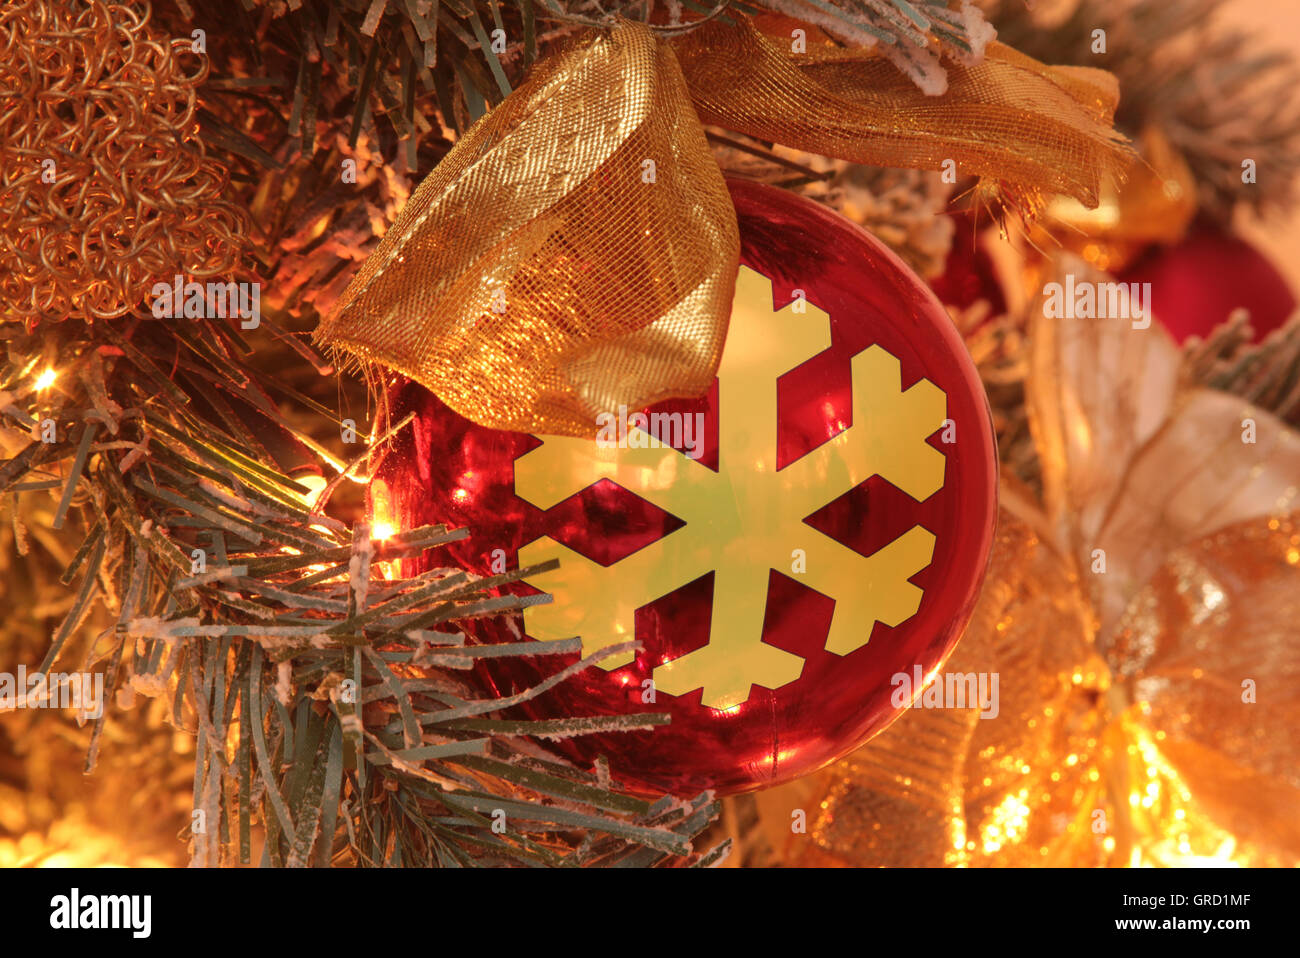 Snowflake On A Christmas Tree Ornament Stock Photo